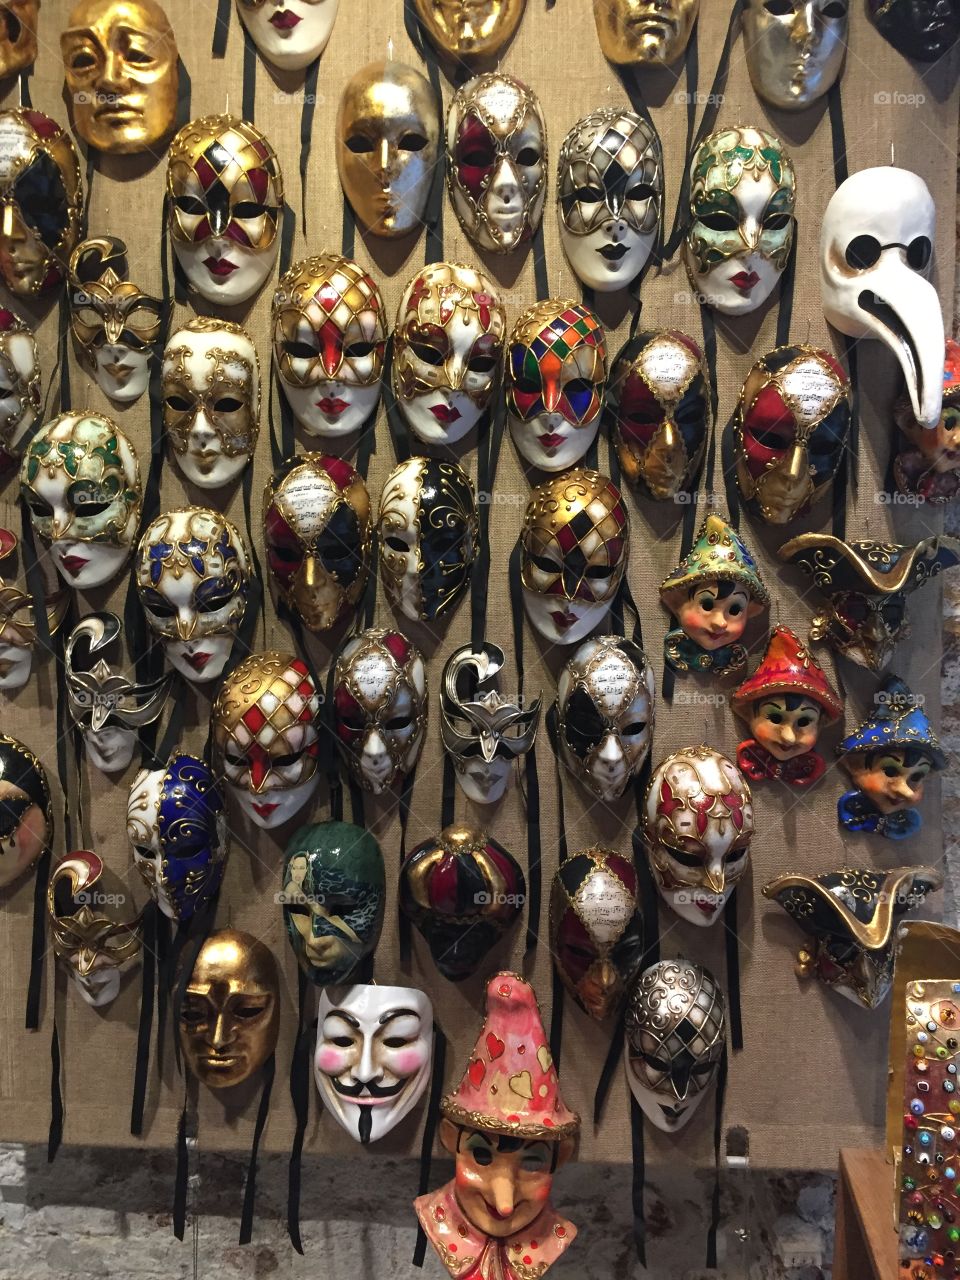 Display of Venetian masks